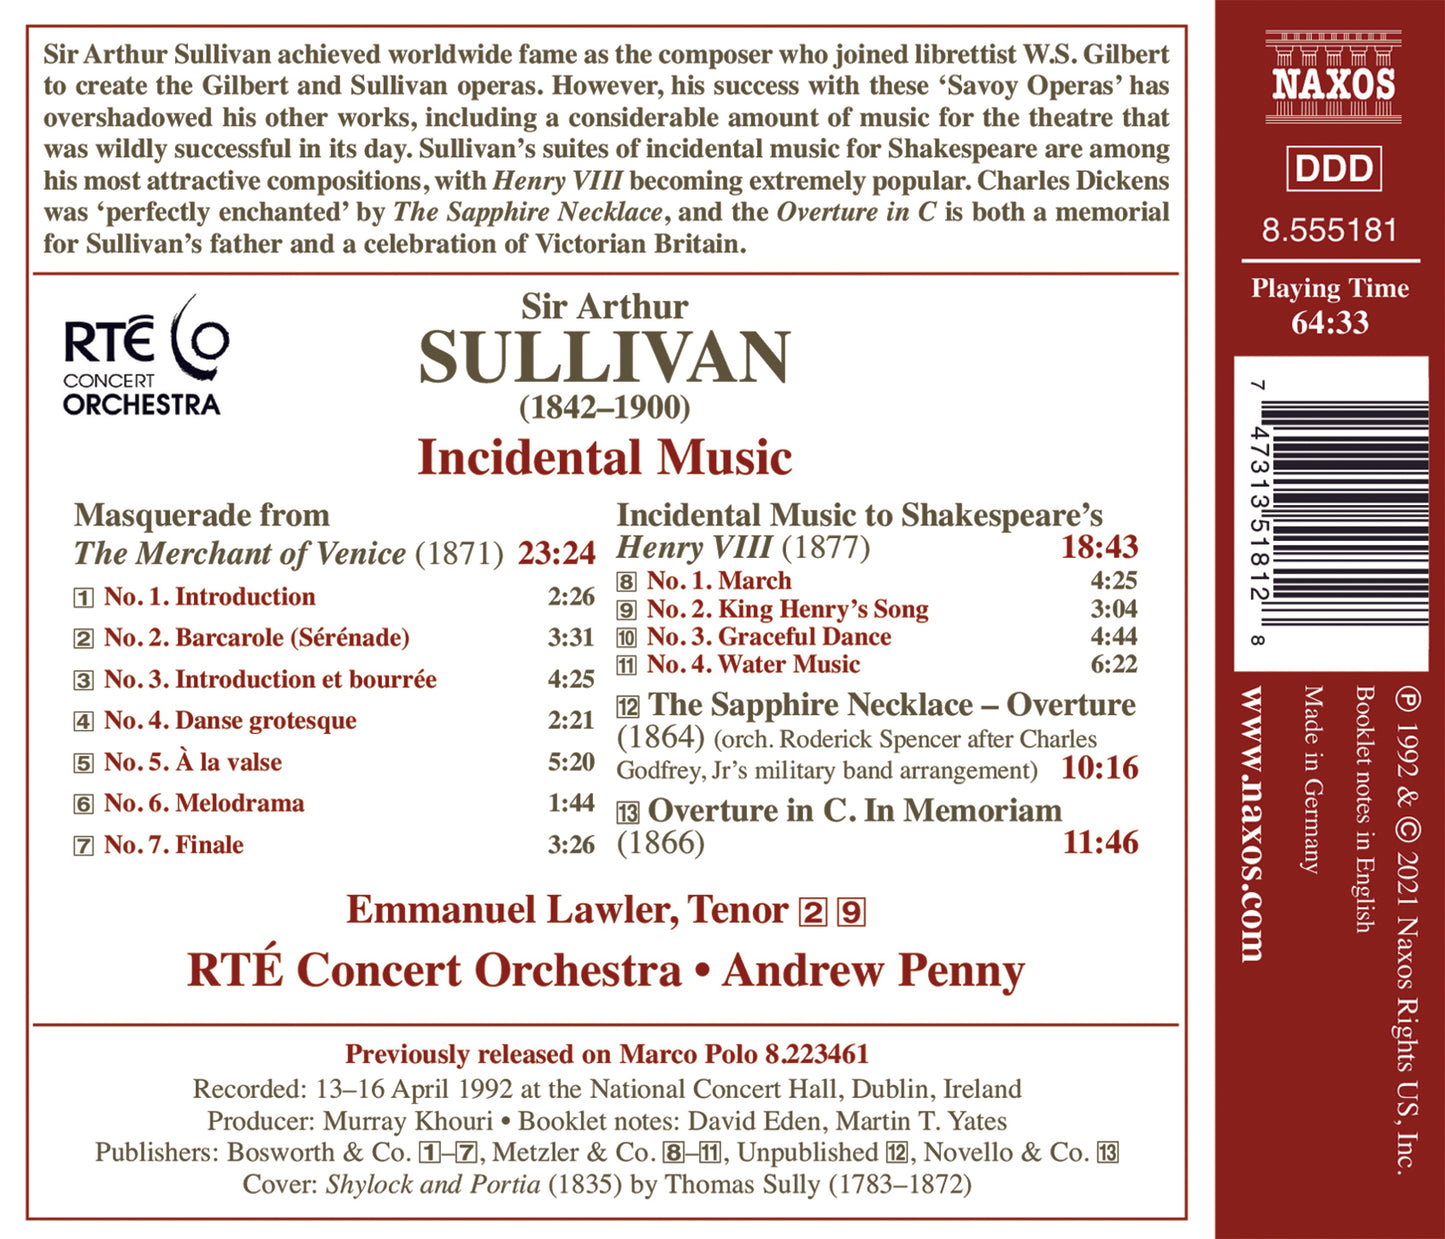 Sullivan: Incidental Music